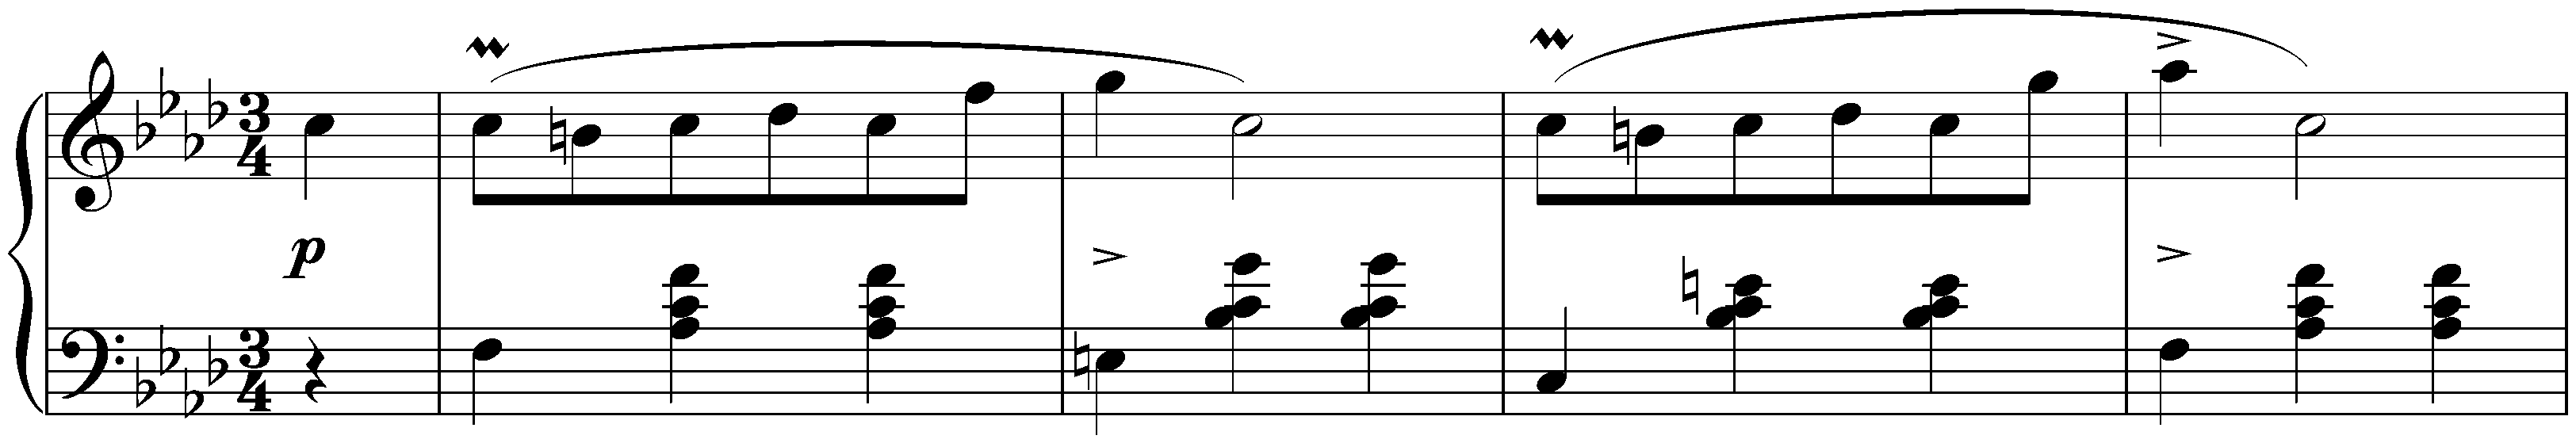 Sixteen deutsche Tänze and two Ecossaises, D 783; 14. Sixteen deutsche Tänze, no. 14 in F minor